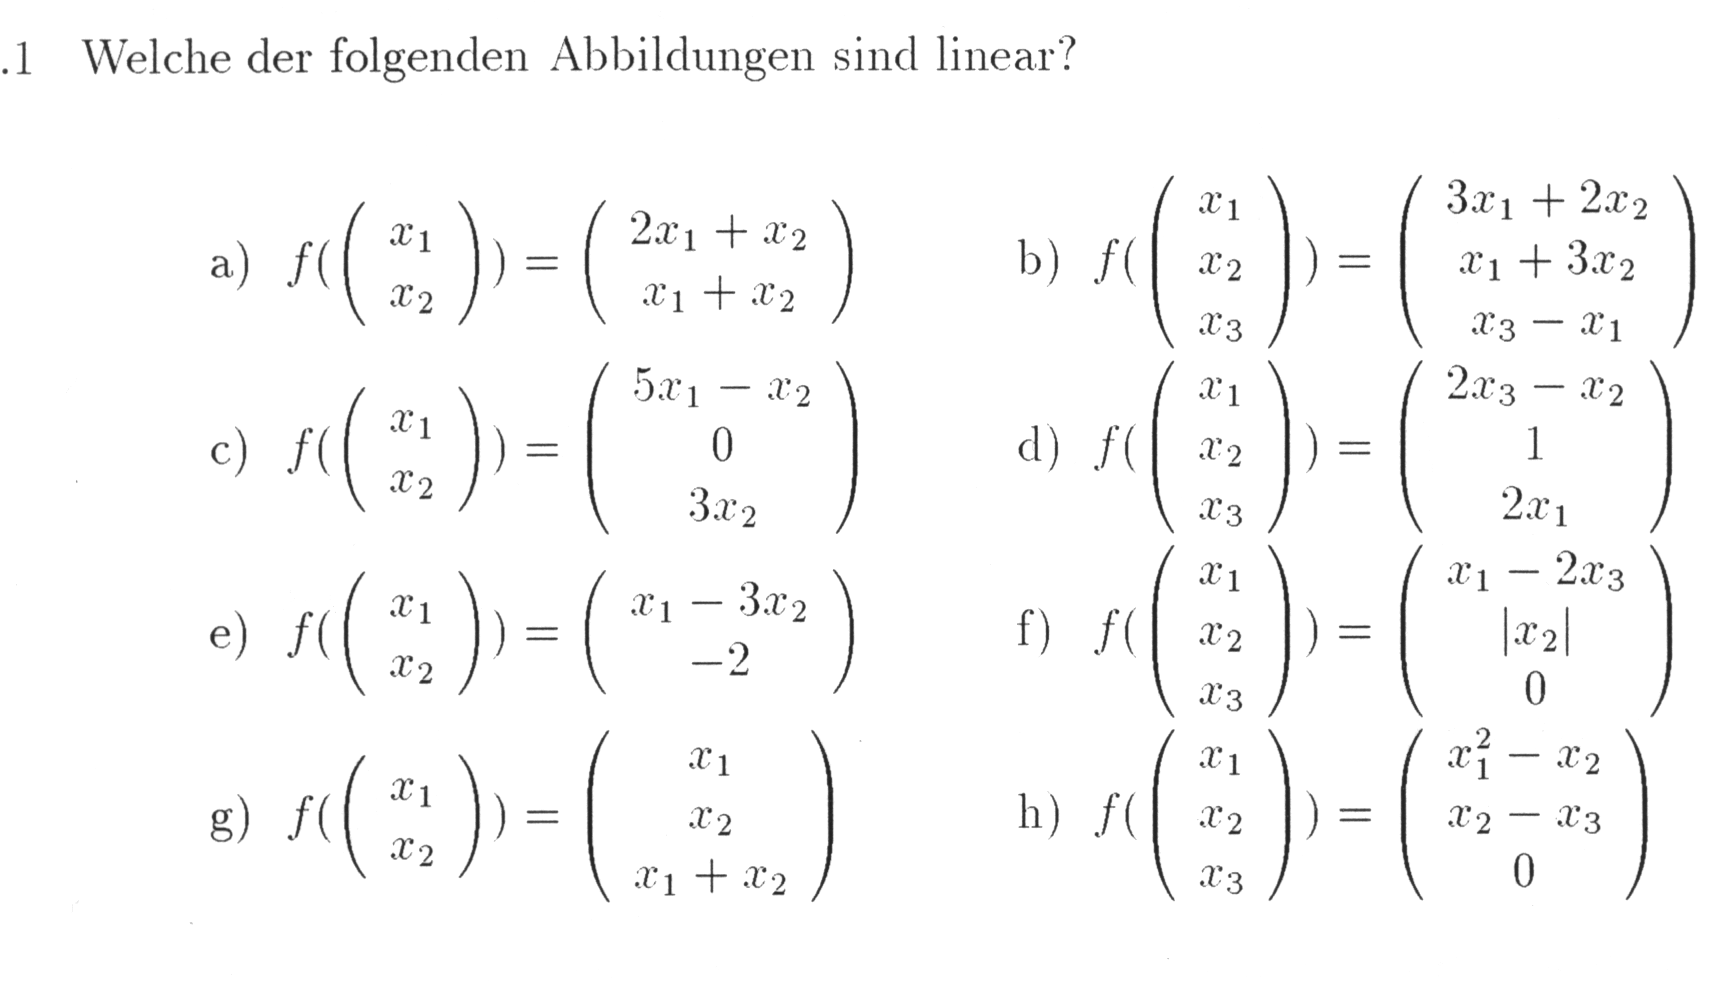 Welche Abbildungen sind linear?